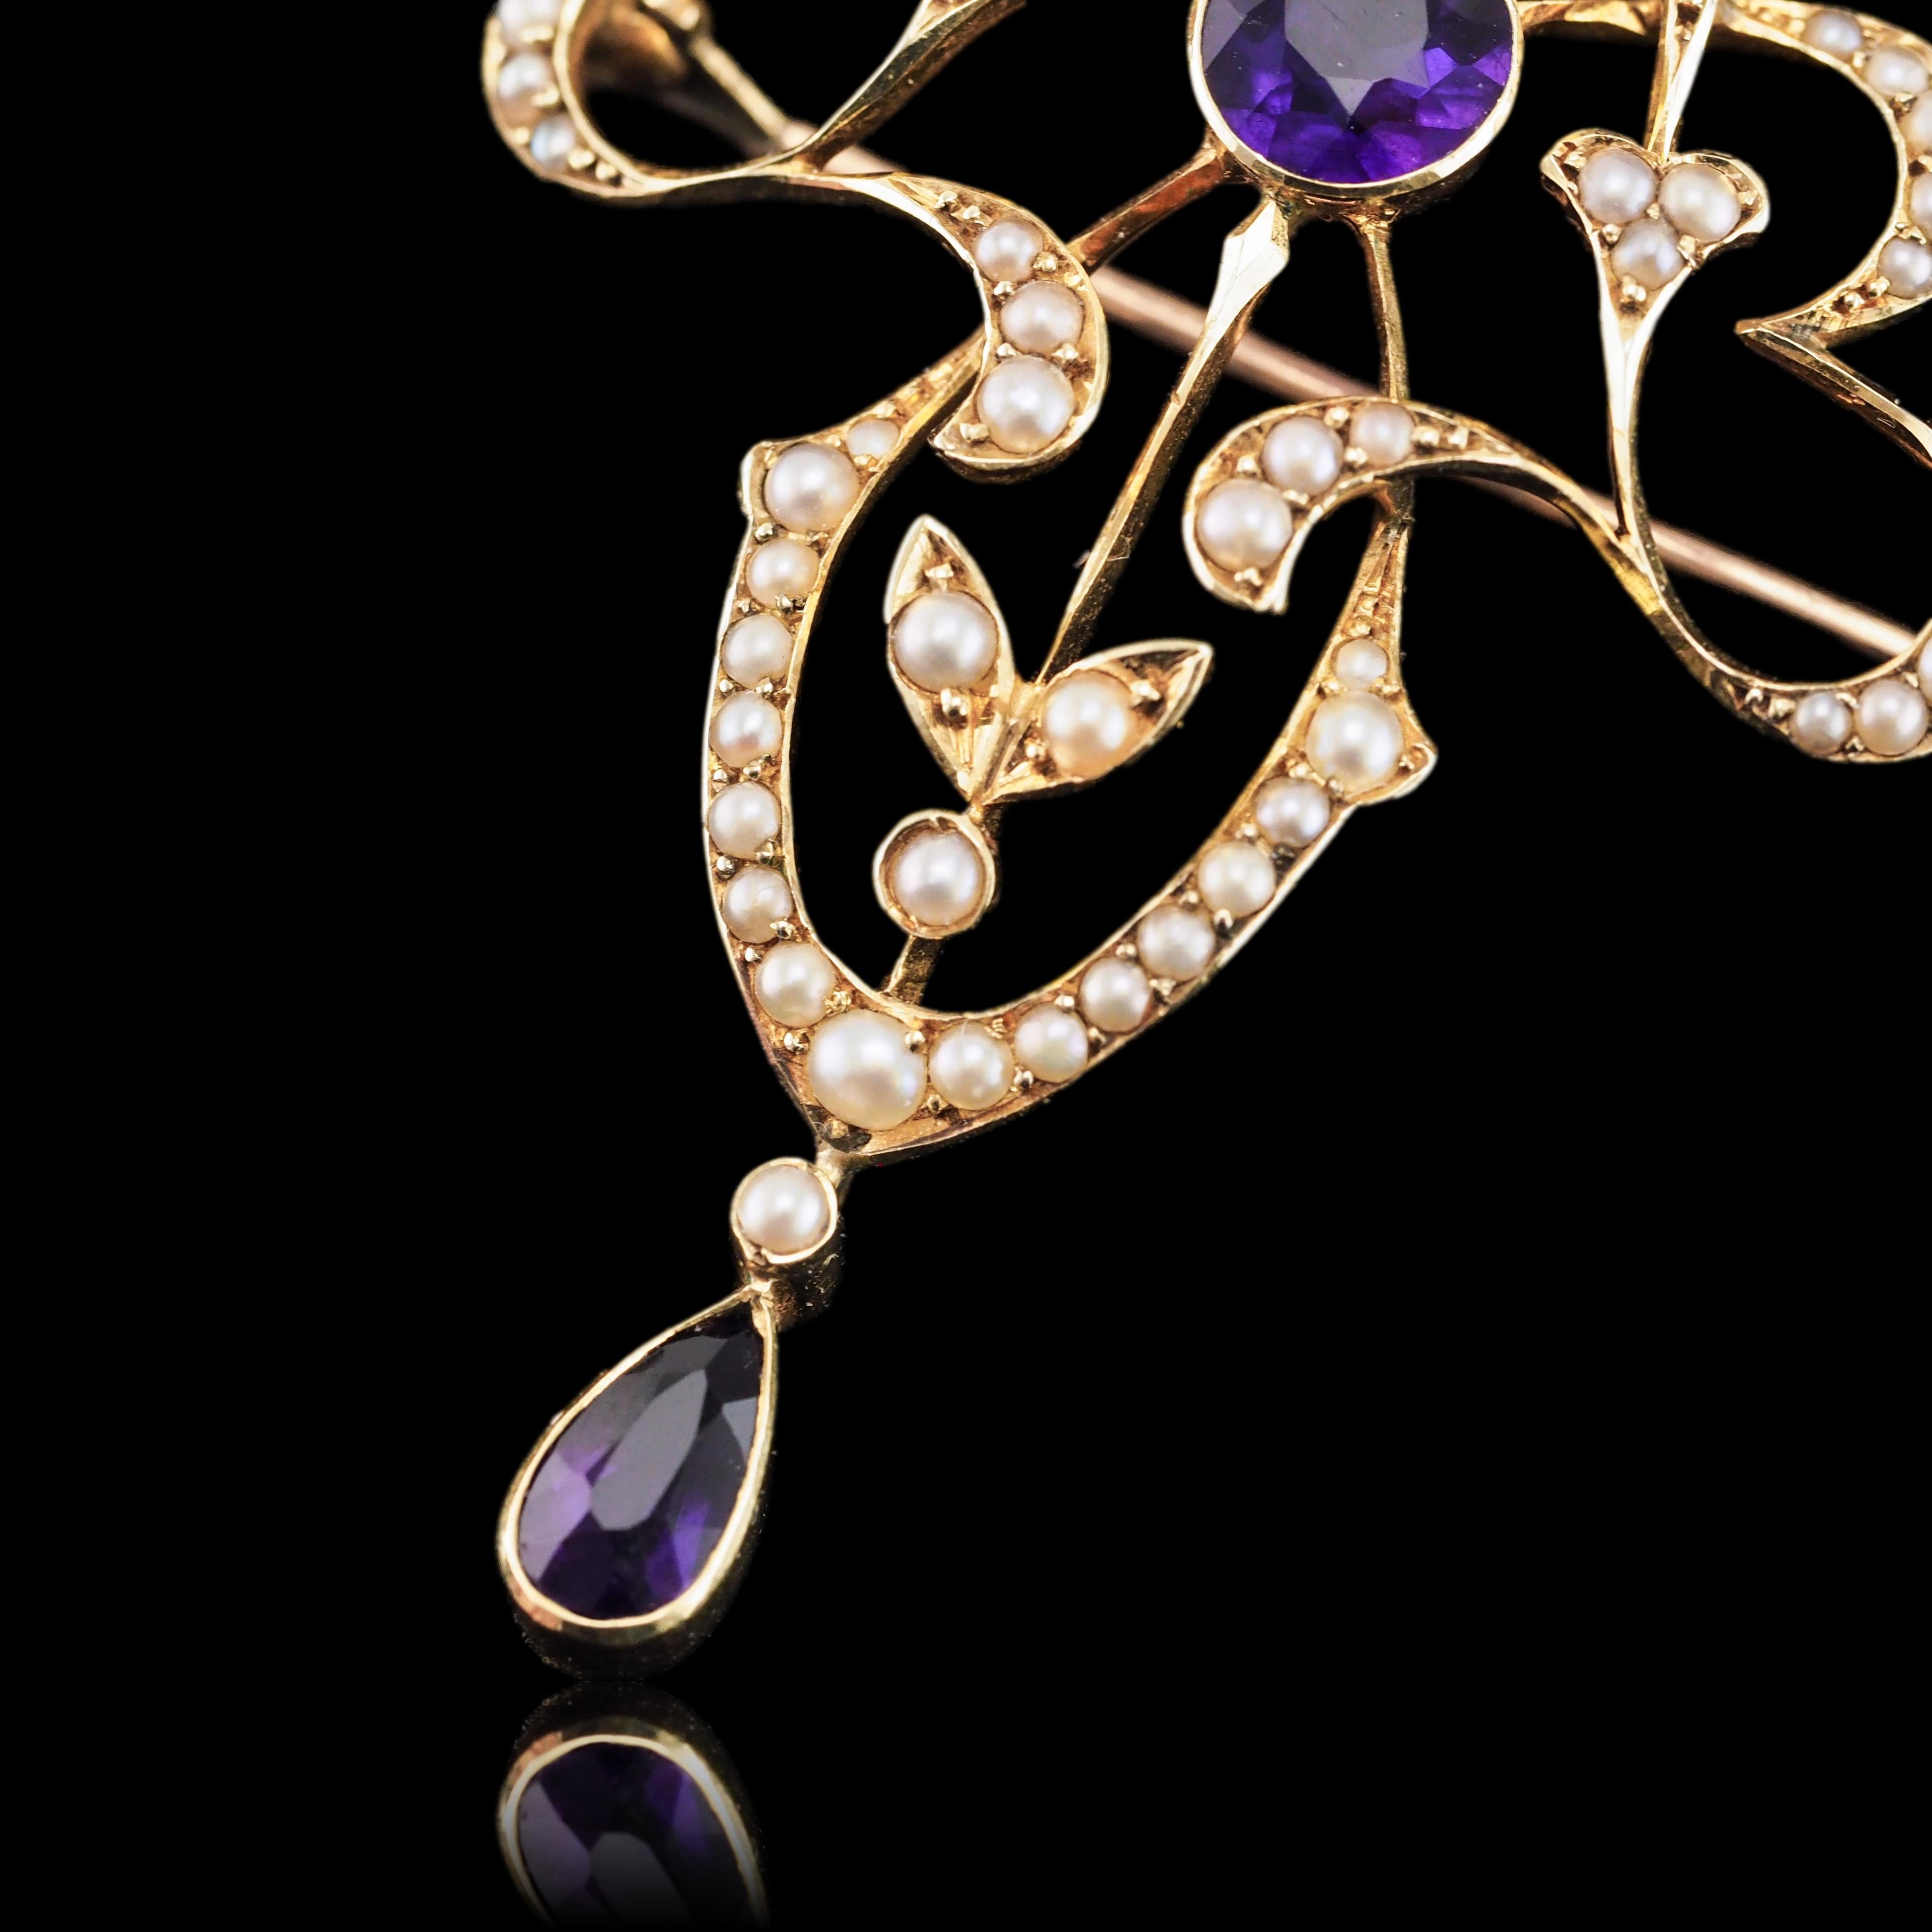 Antique Edwardian Amethyst & Seed Pearl 15K Gold Pendant Necklace Art Nouveau  For Sale 2